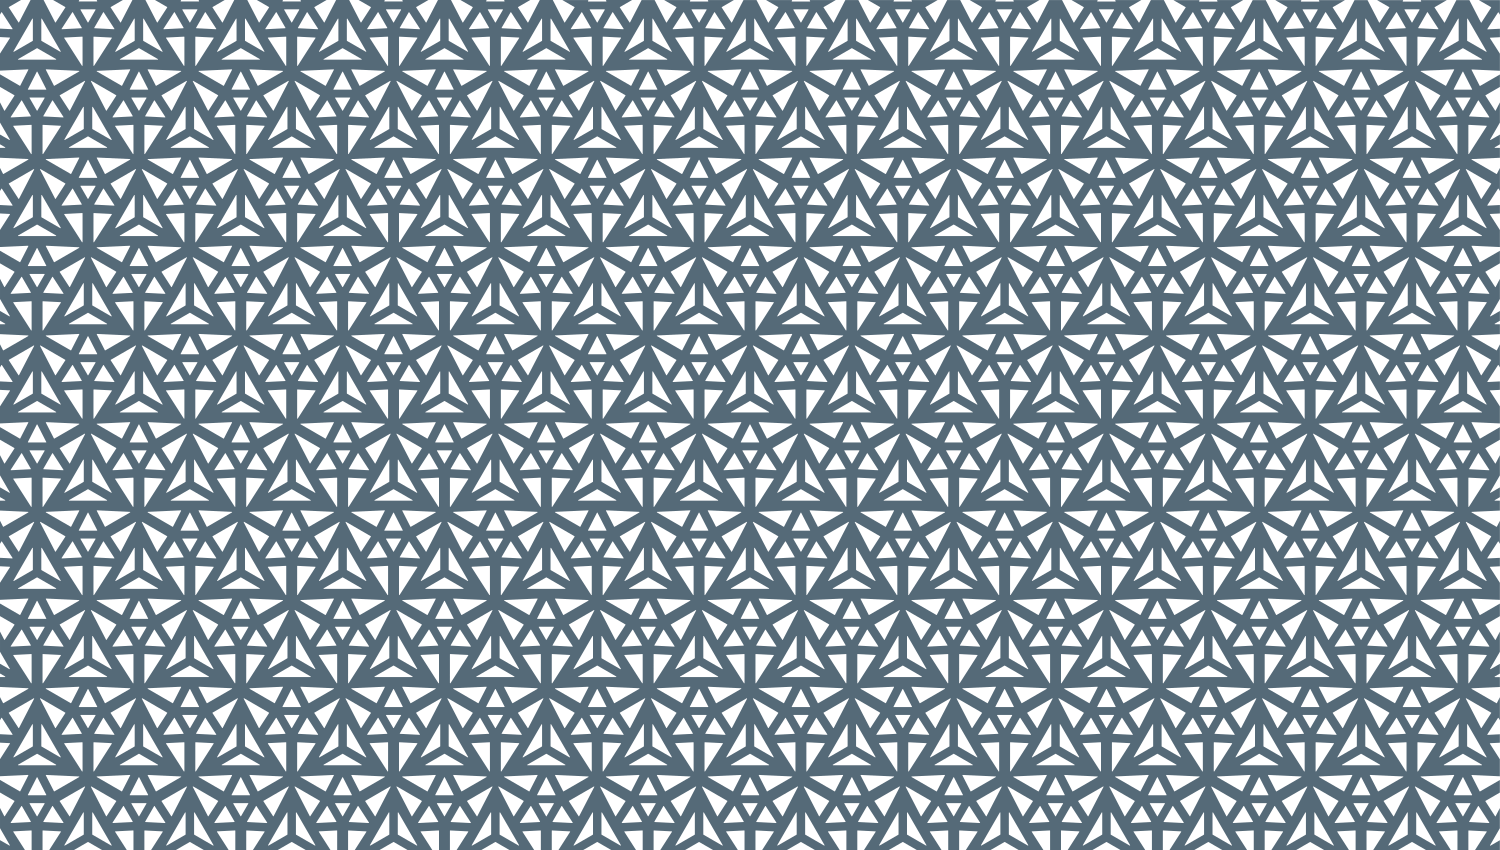 Parasoleil™ Sierpinski© pattern displayed with a blue color overlay